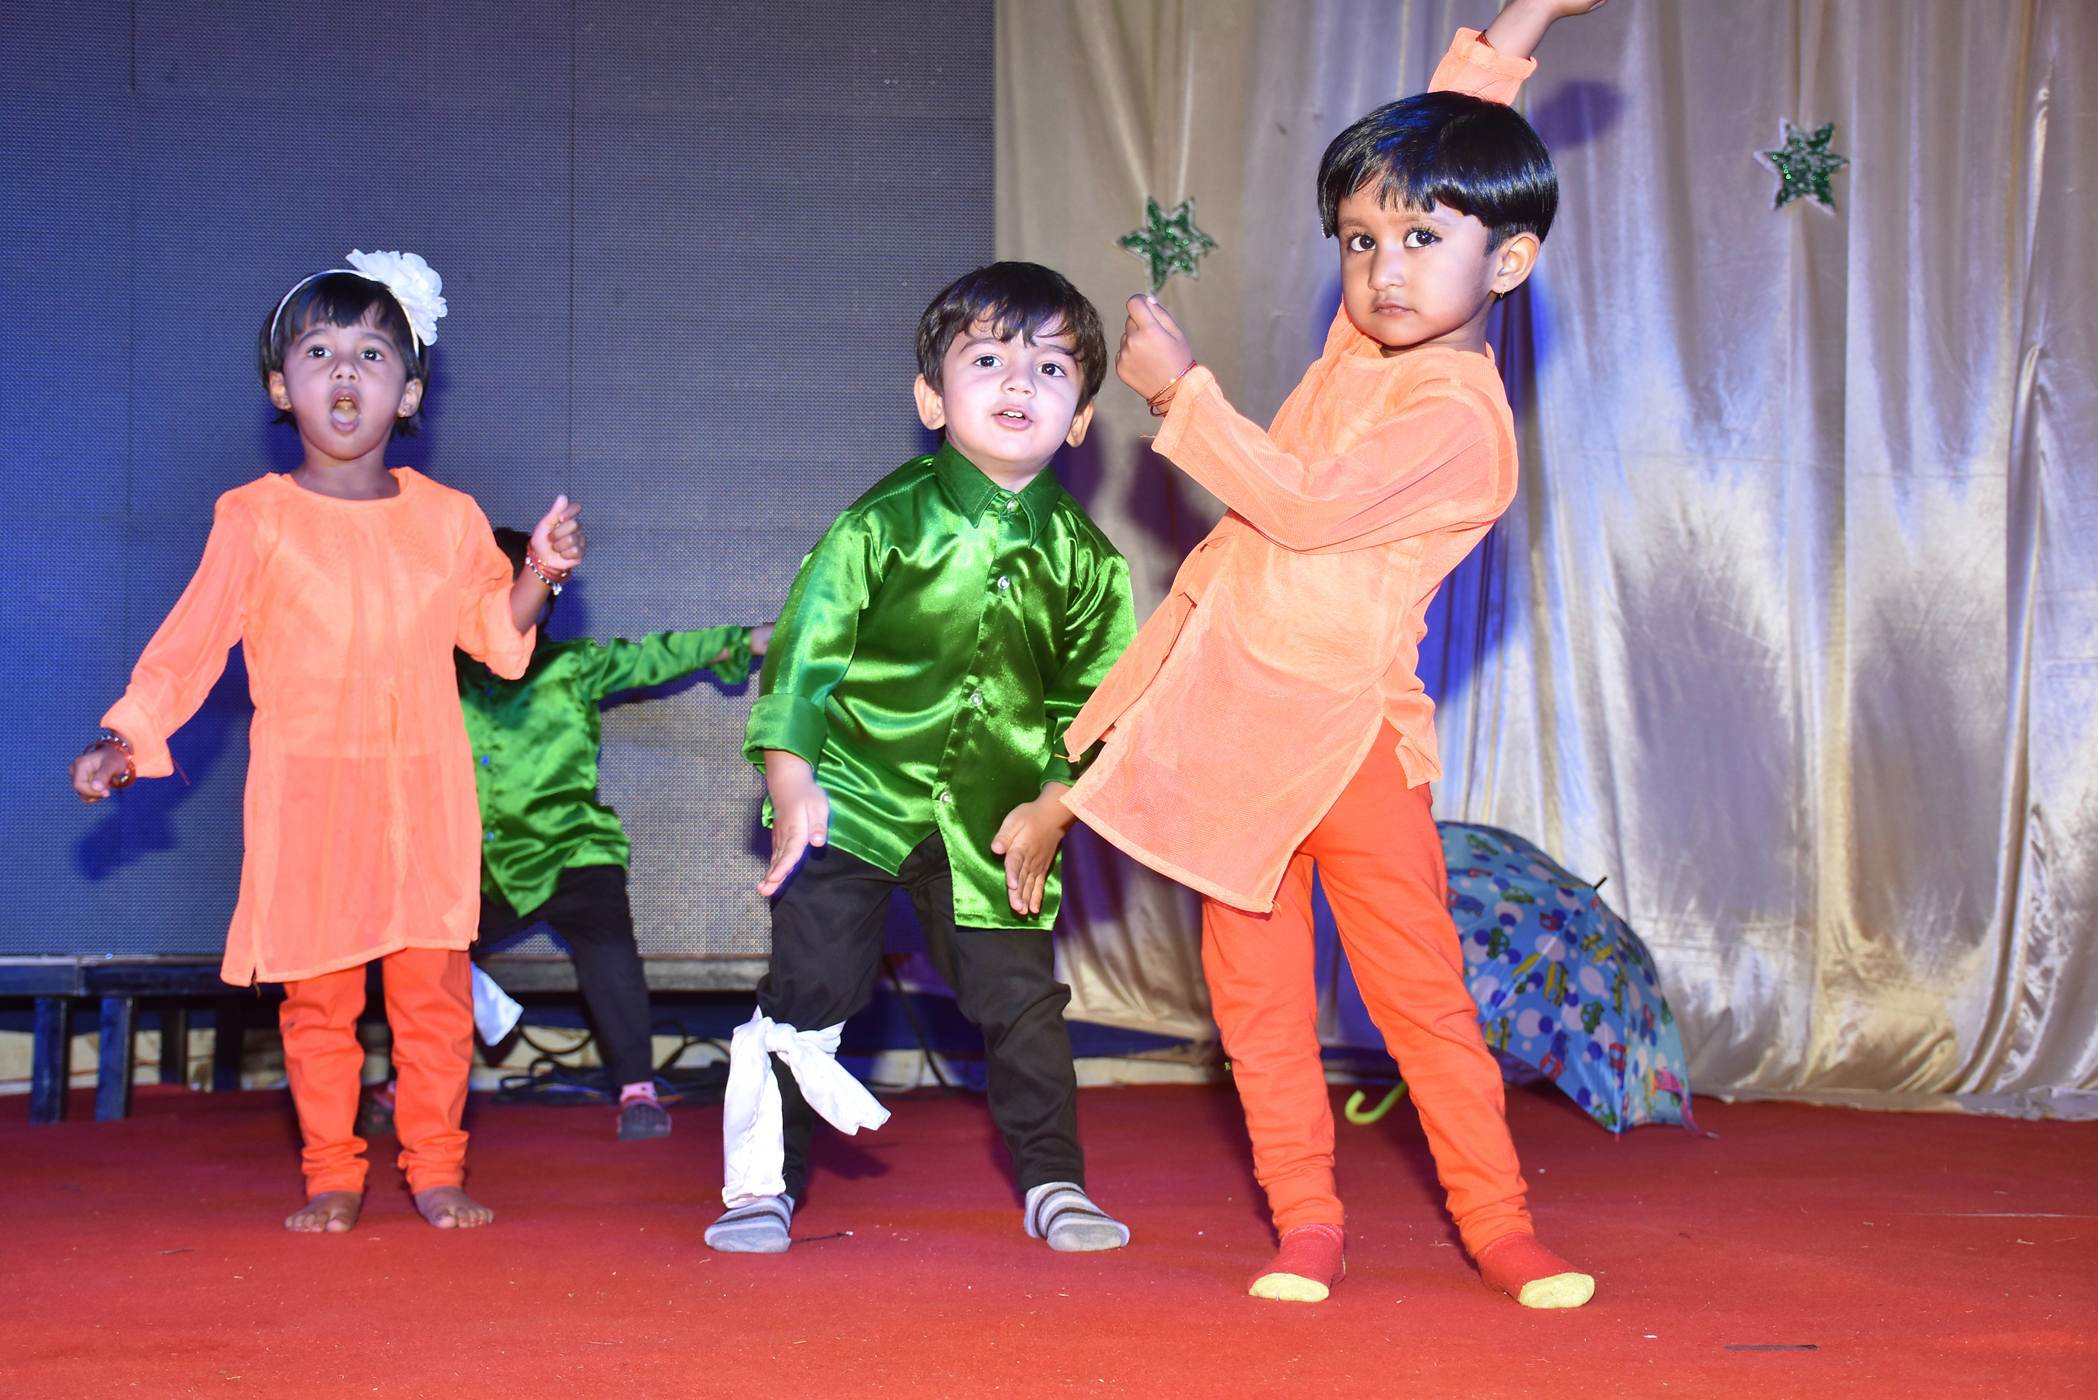 vijaya convent dance performance annual gathering of kids in the school